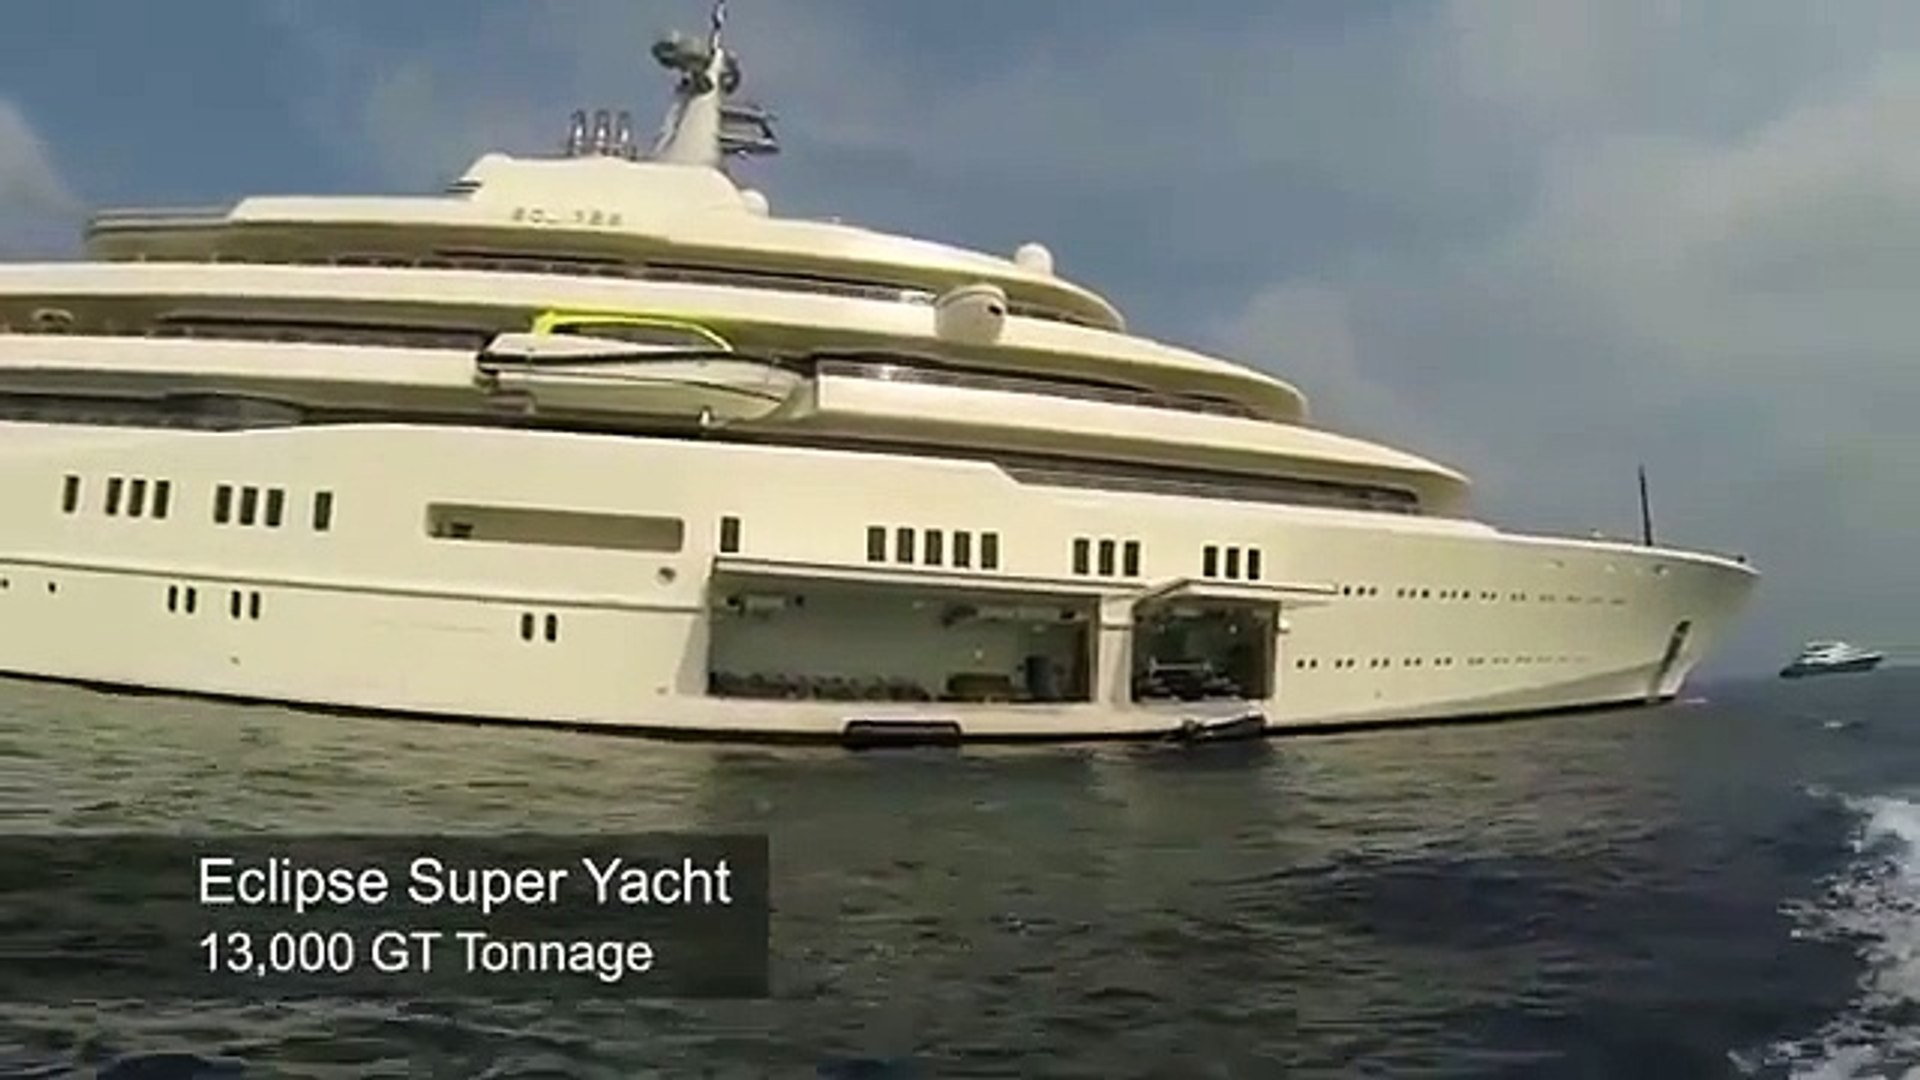 Eclipse Yacht Of Roman Abramovich New 2015 Luxury Yacht